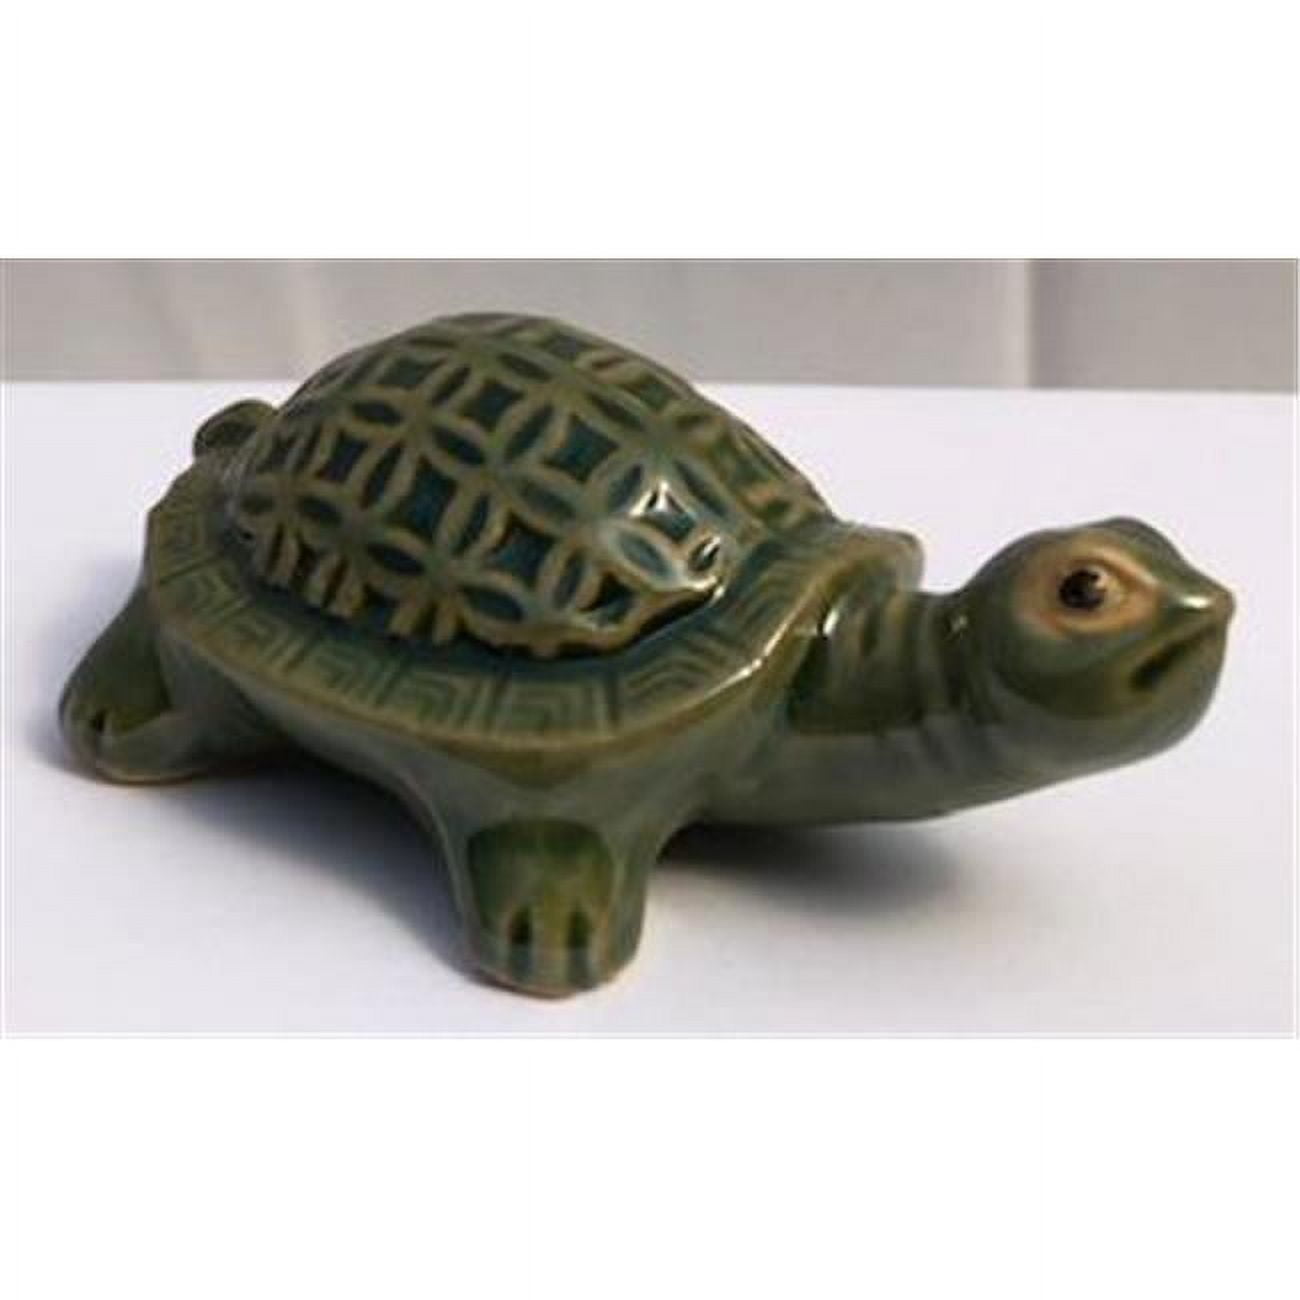 Picture of Bonsai Boy e3502 1.5 in. Miniature Ceramic Turtle Figurine